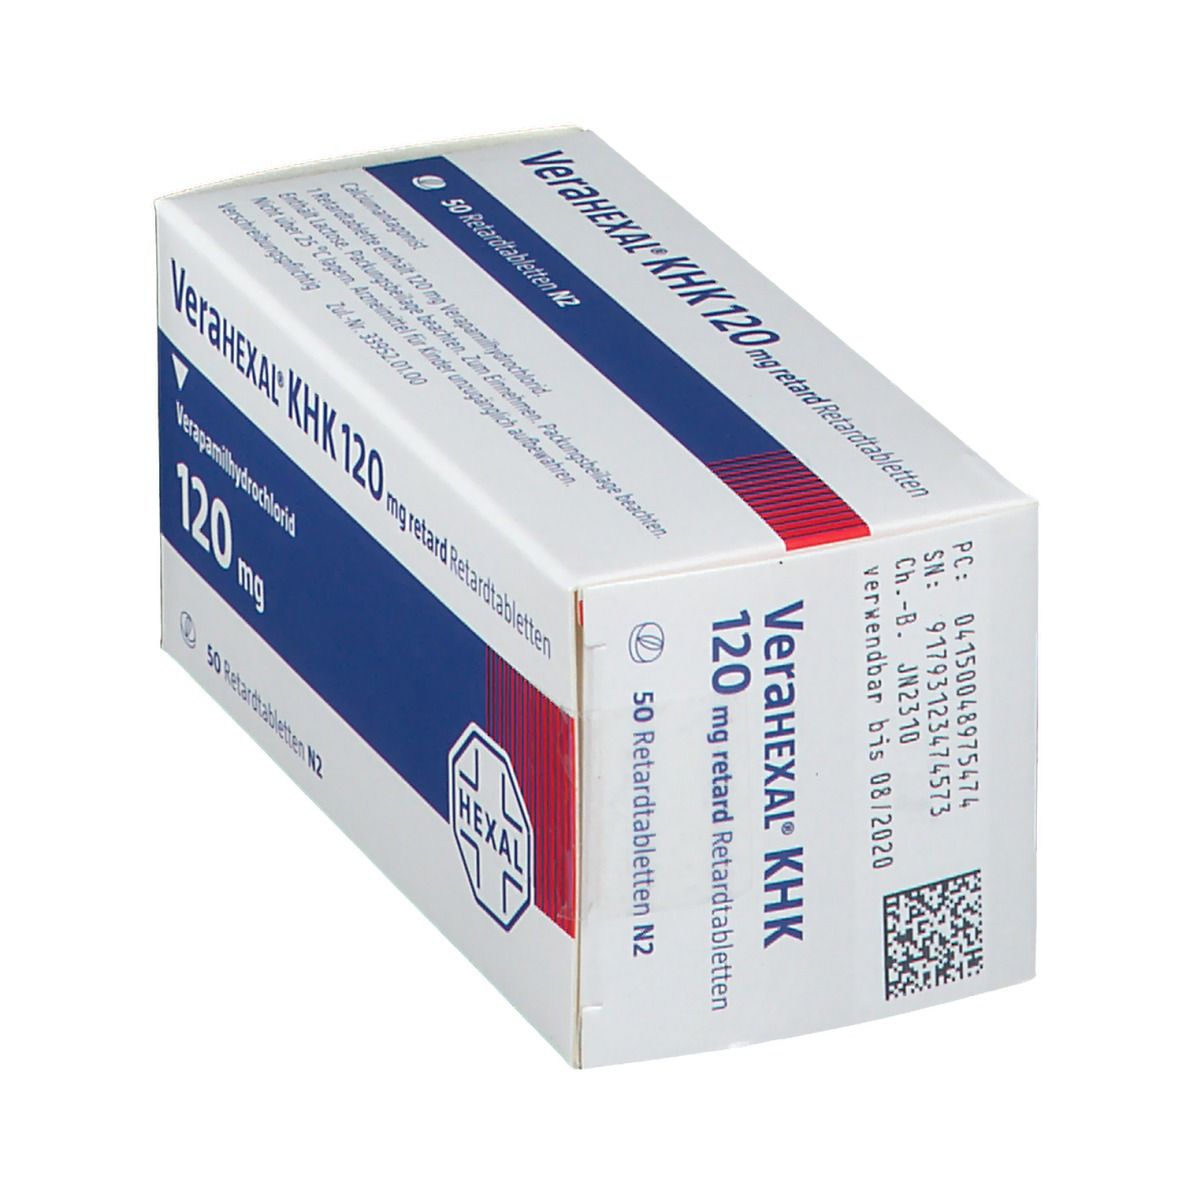 VeraHEXAL® KHK 120 mg retard